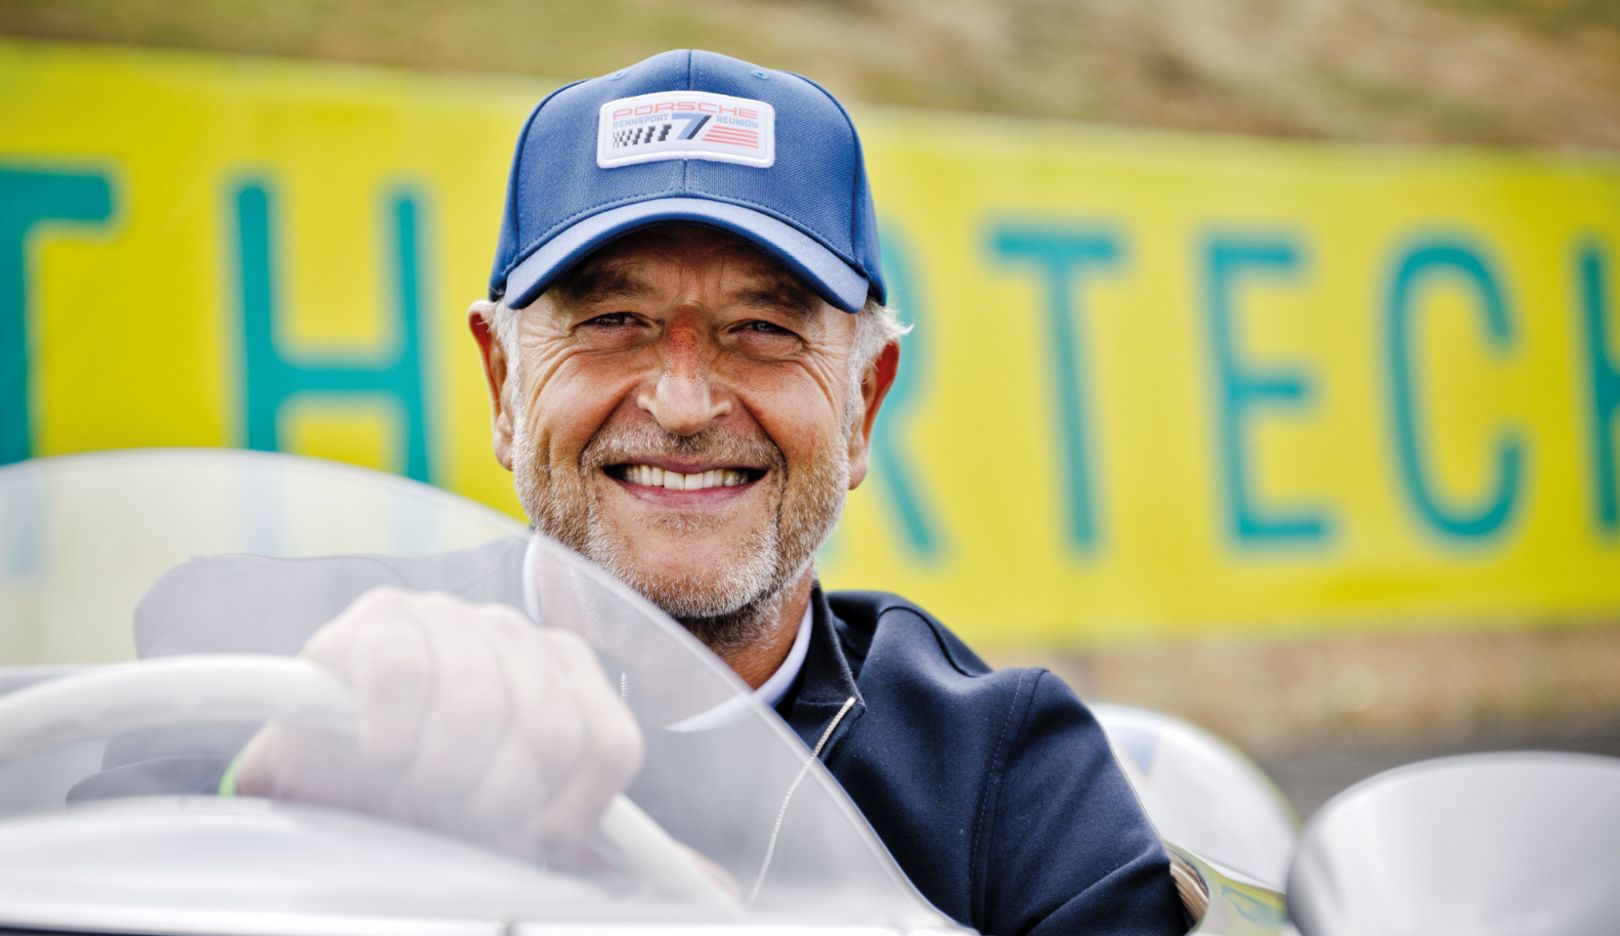 “Our community is unique, and its passion spurs us on to keep the Porsche legend alive.” Detlev von Platen